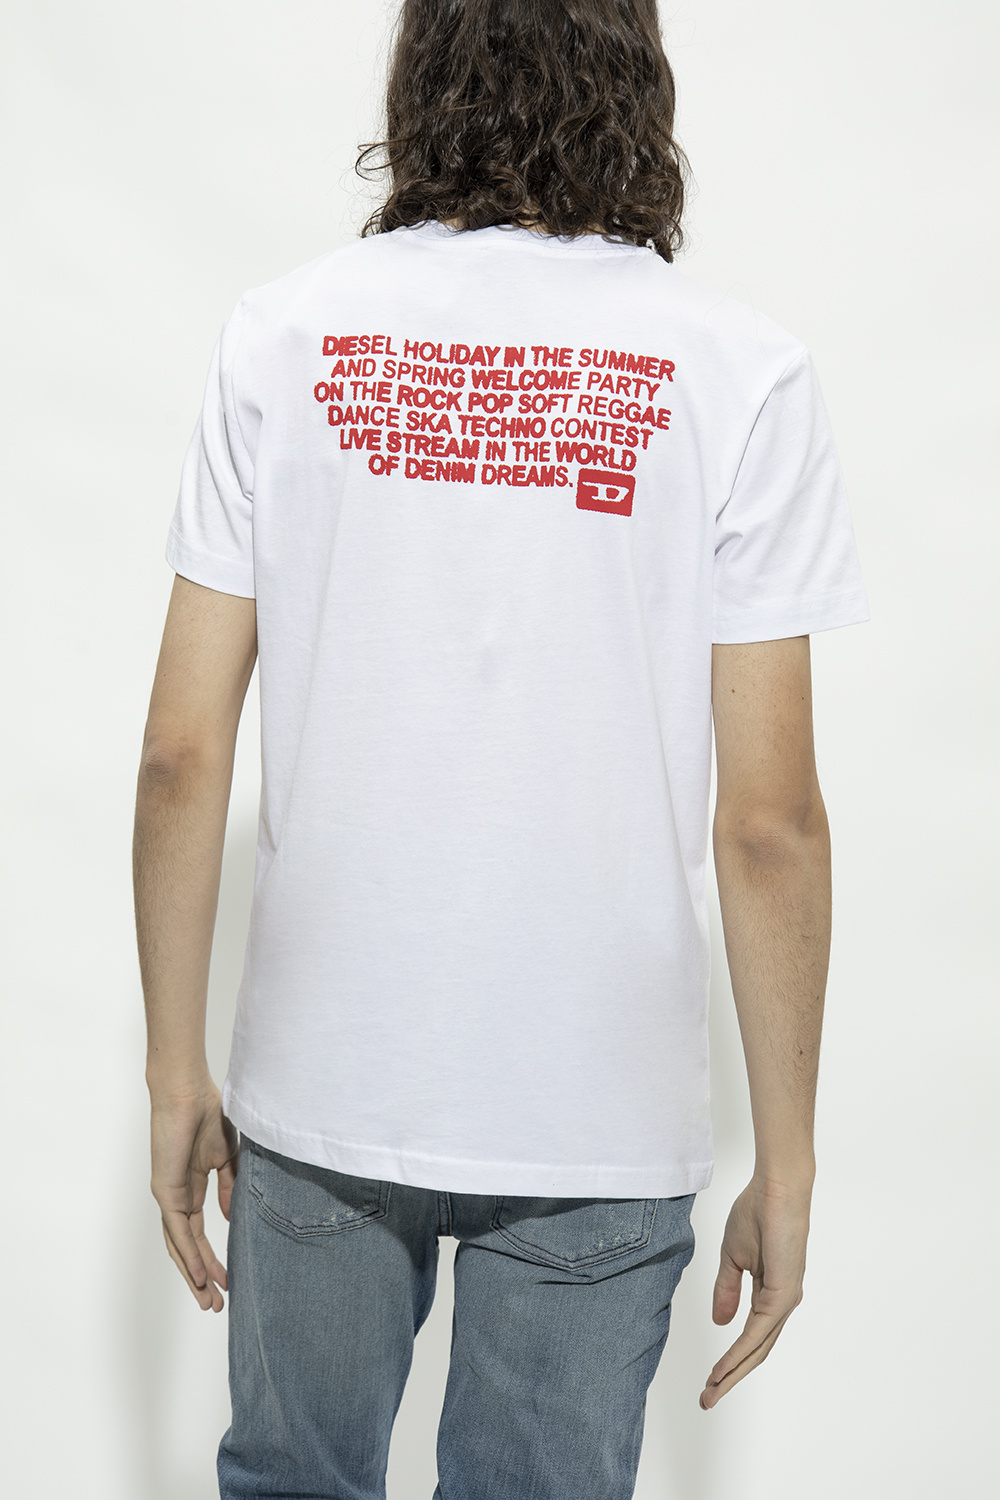 DIEGOR T Clothing Reflective K57\' - 28288 \'T Industries StclaircomoShops Alpha Men\'s - | eng - | Shirt Diesel product shirt - T Label